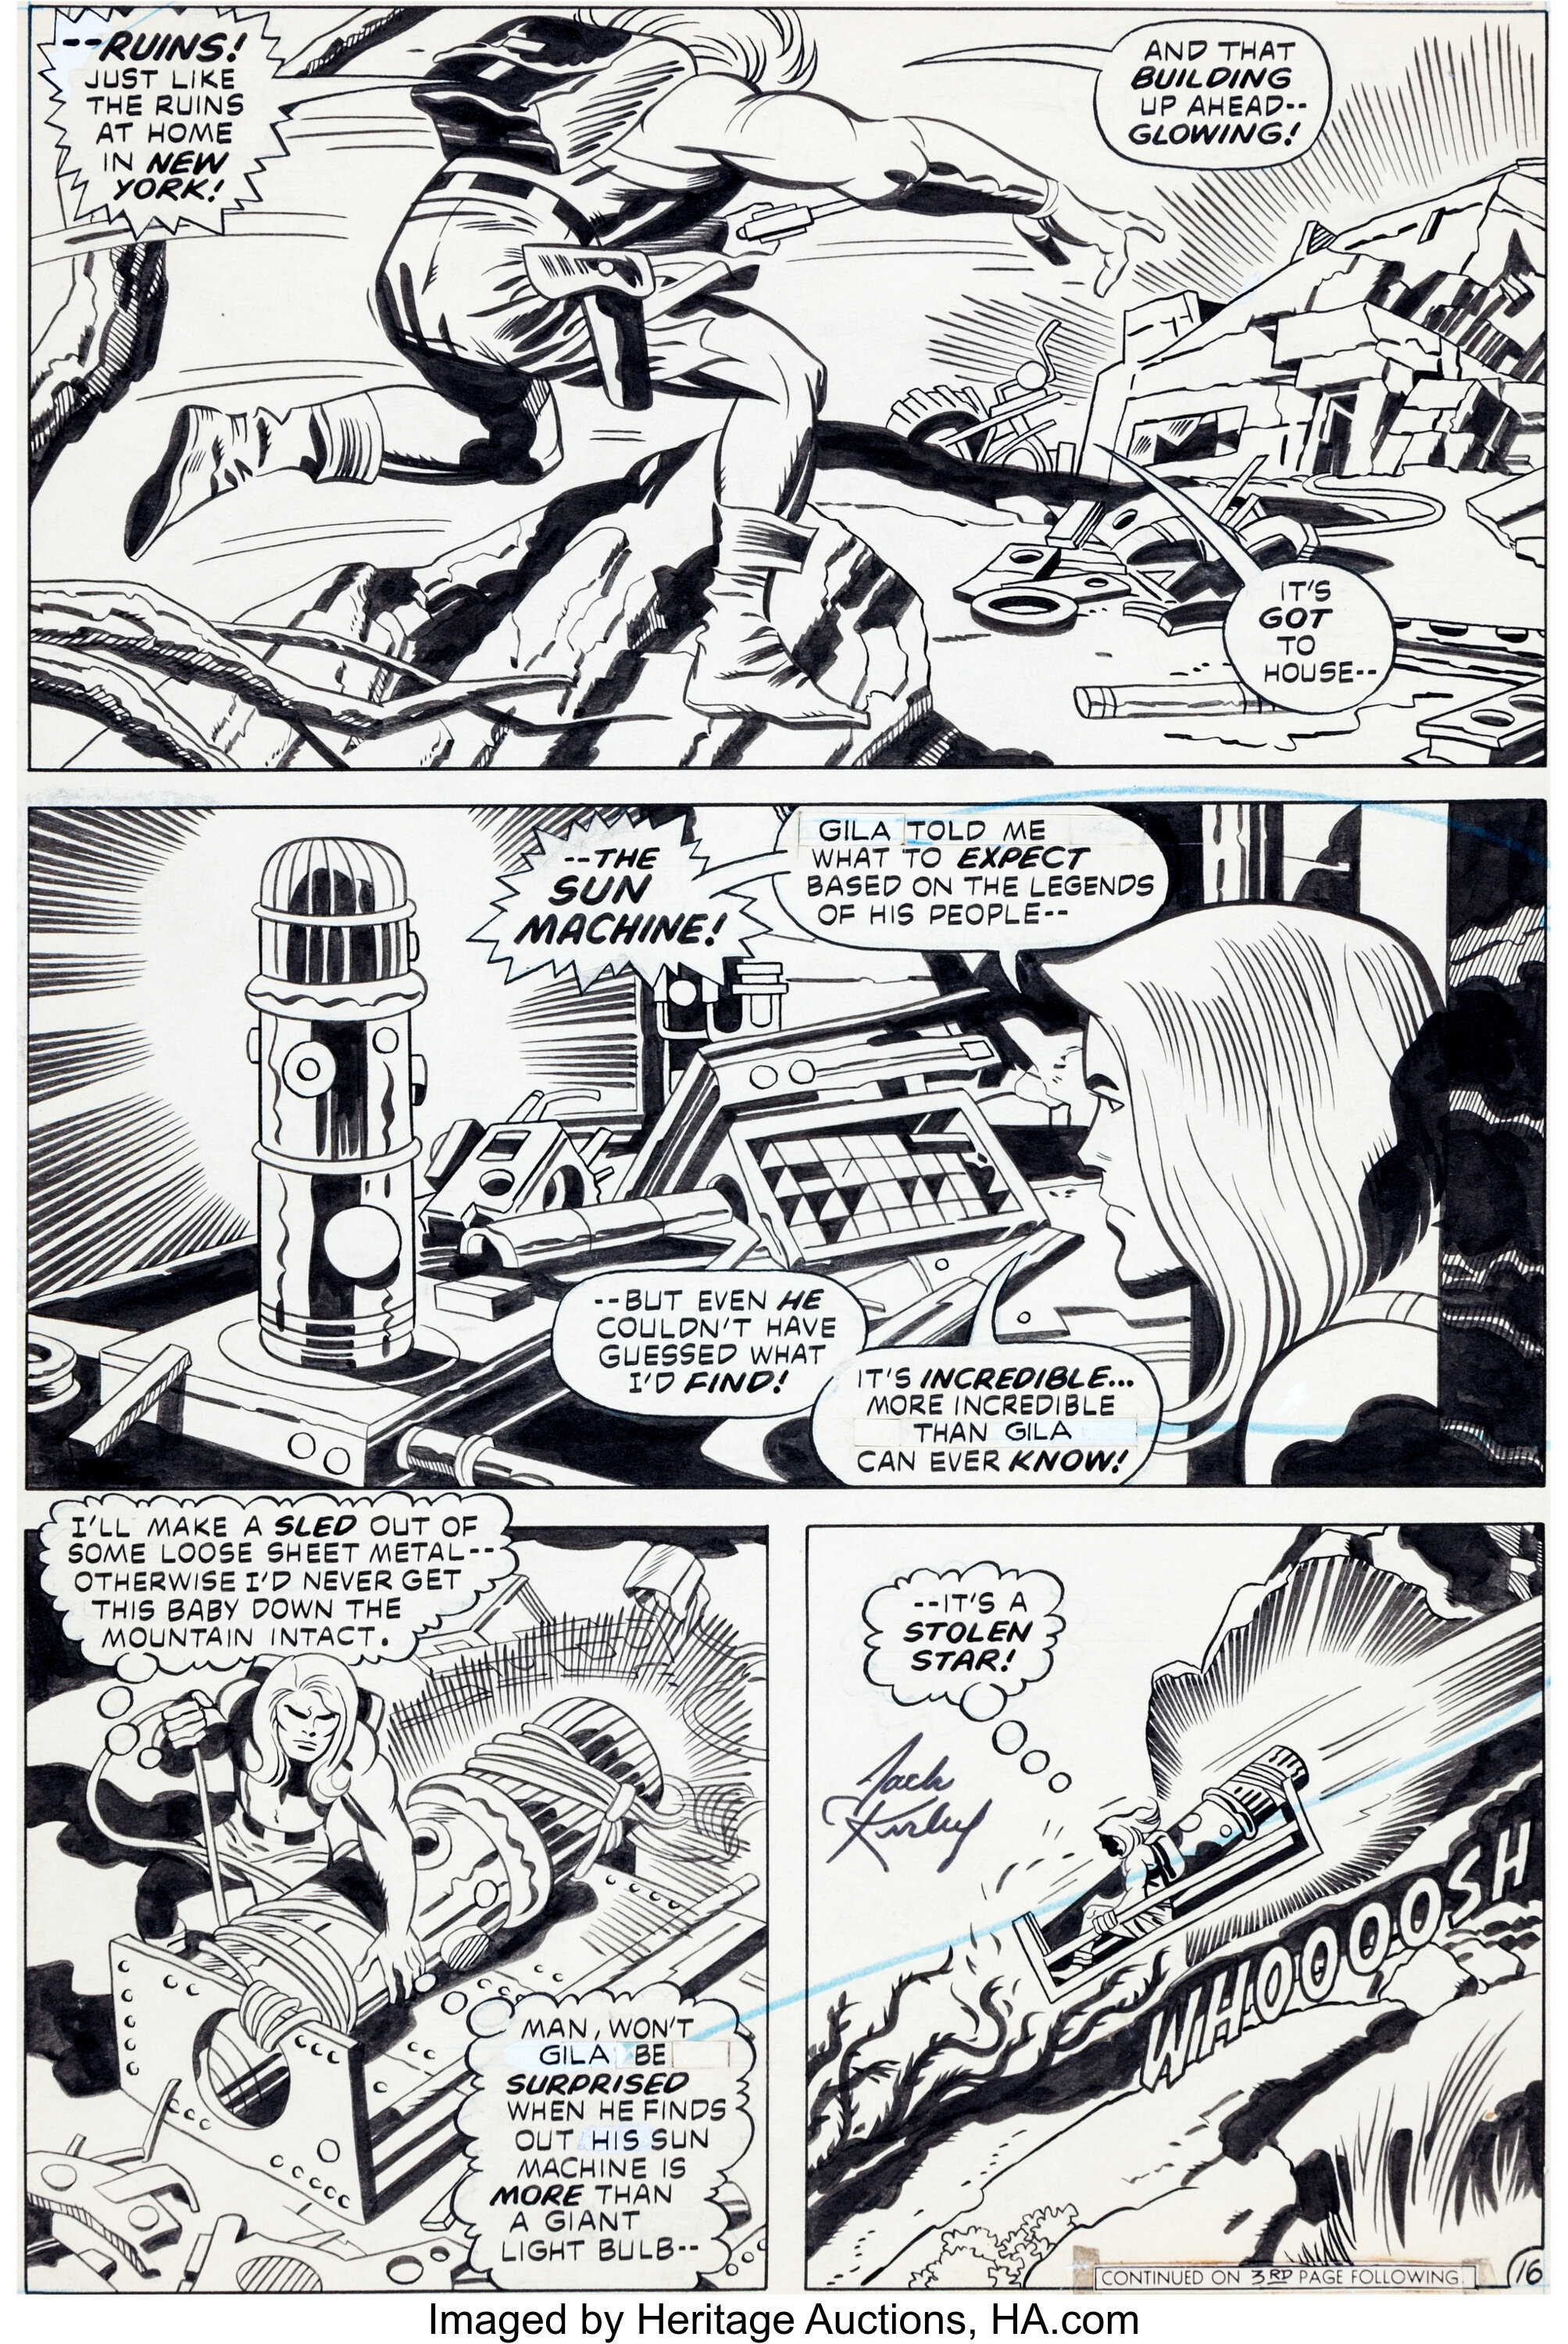 Kamandi # 6 VF/NM DC Comic Book Bronze Age Jack Kirby Series Last Boy Earth J250 